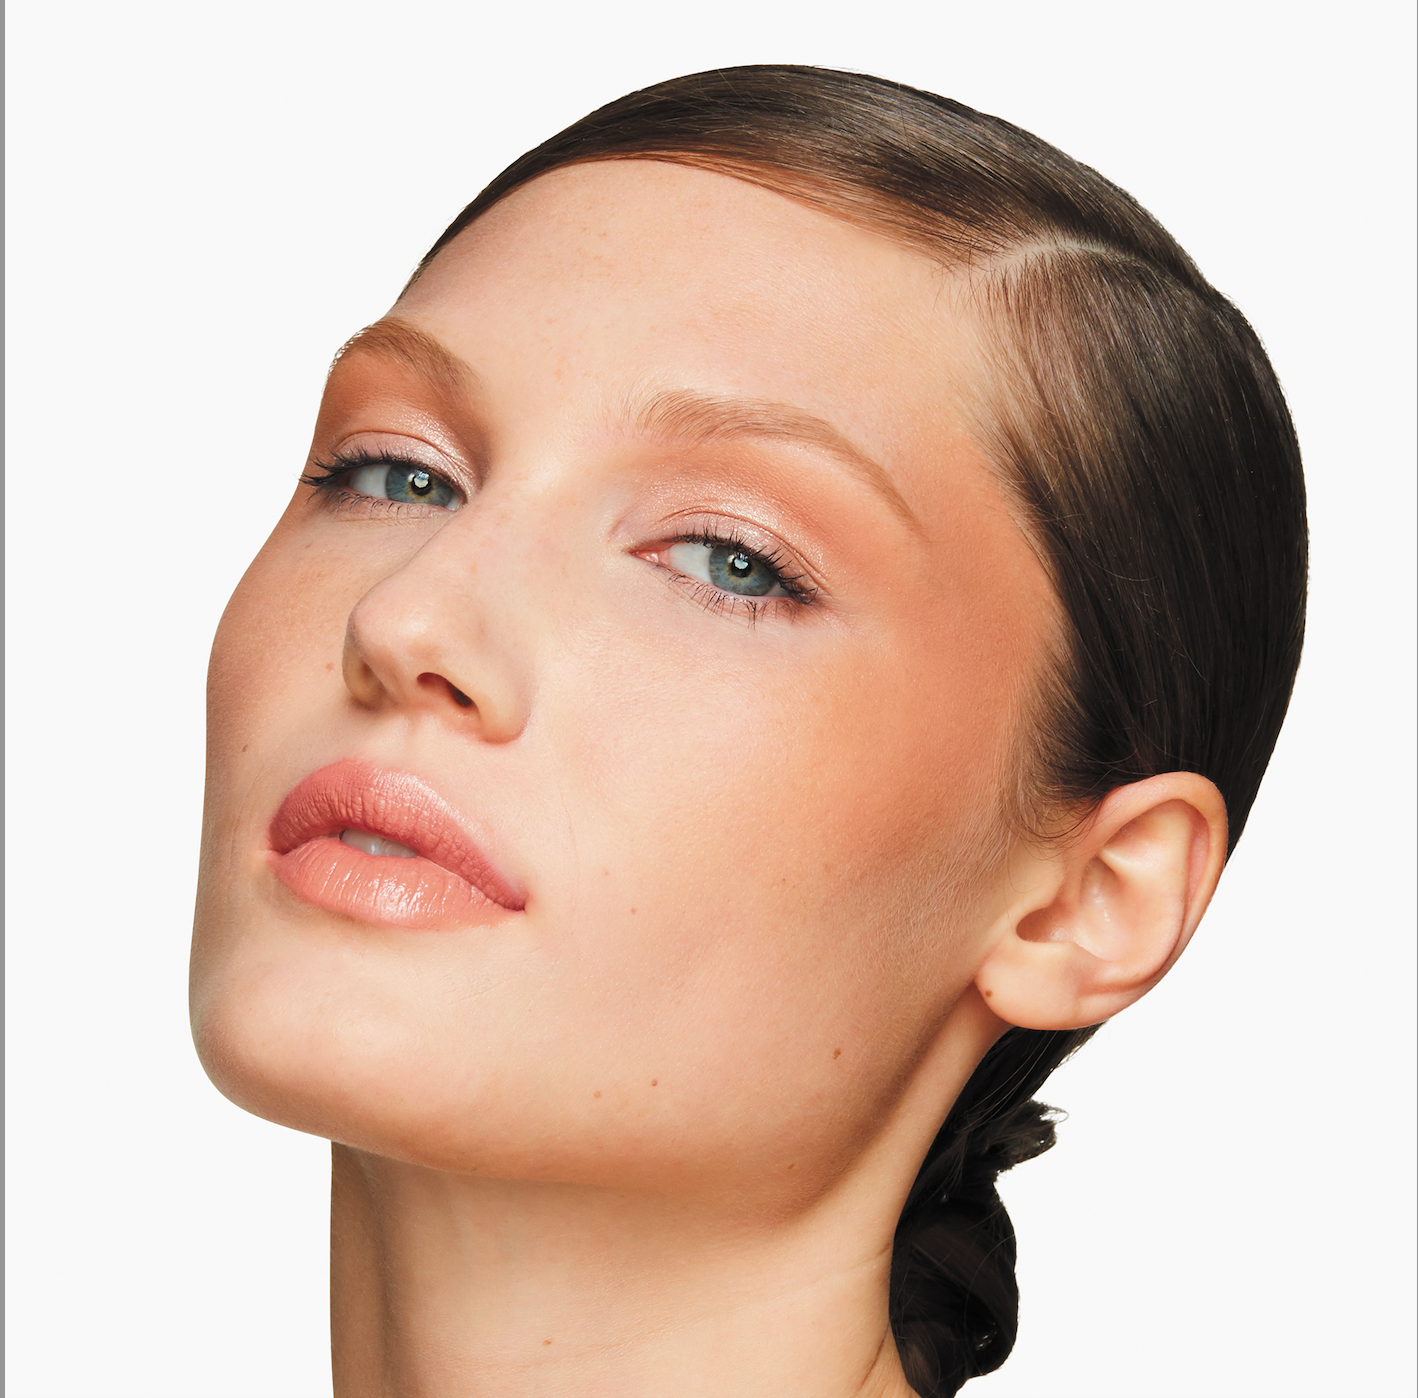 Shiseido donna skinimalism makeup naturale effetto maschera